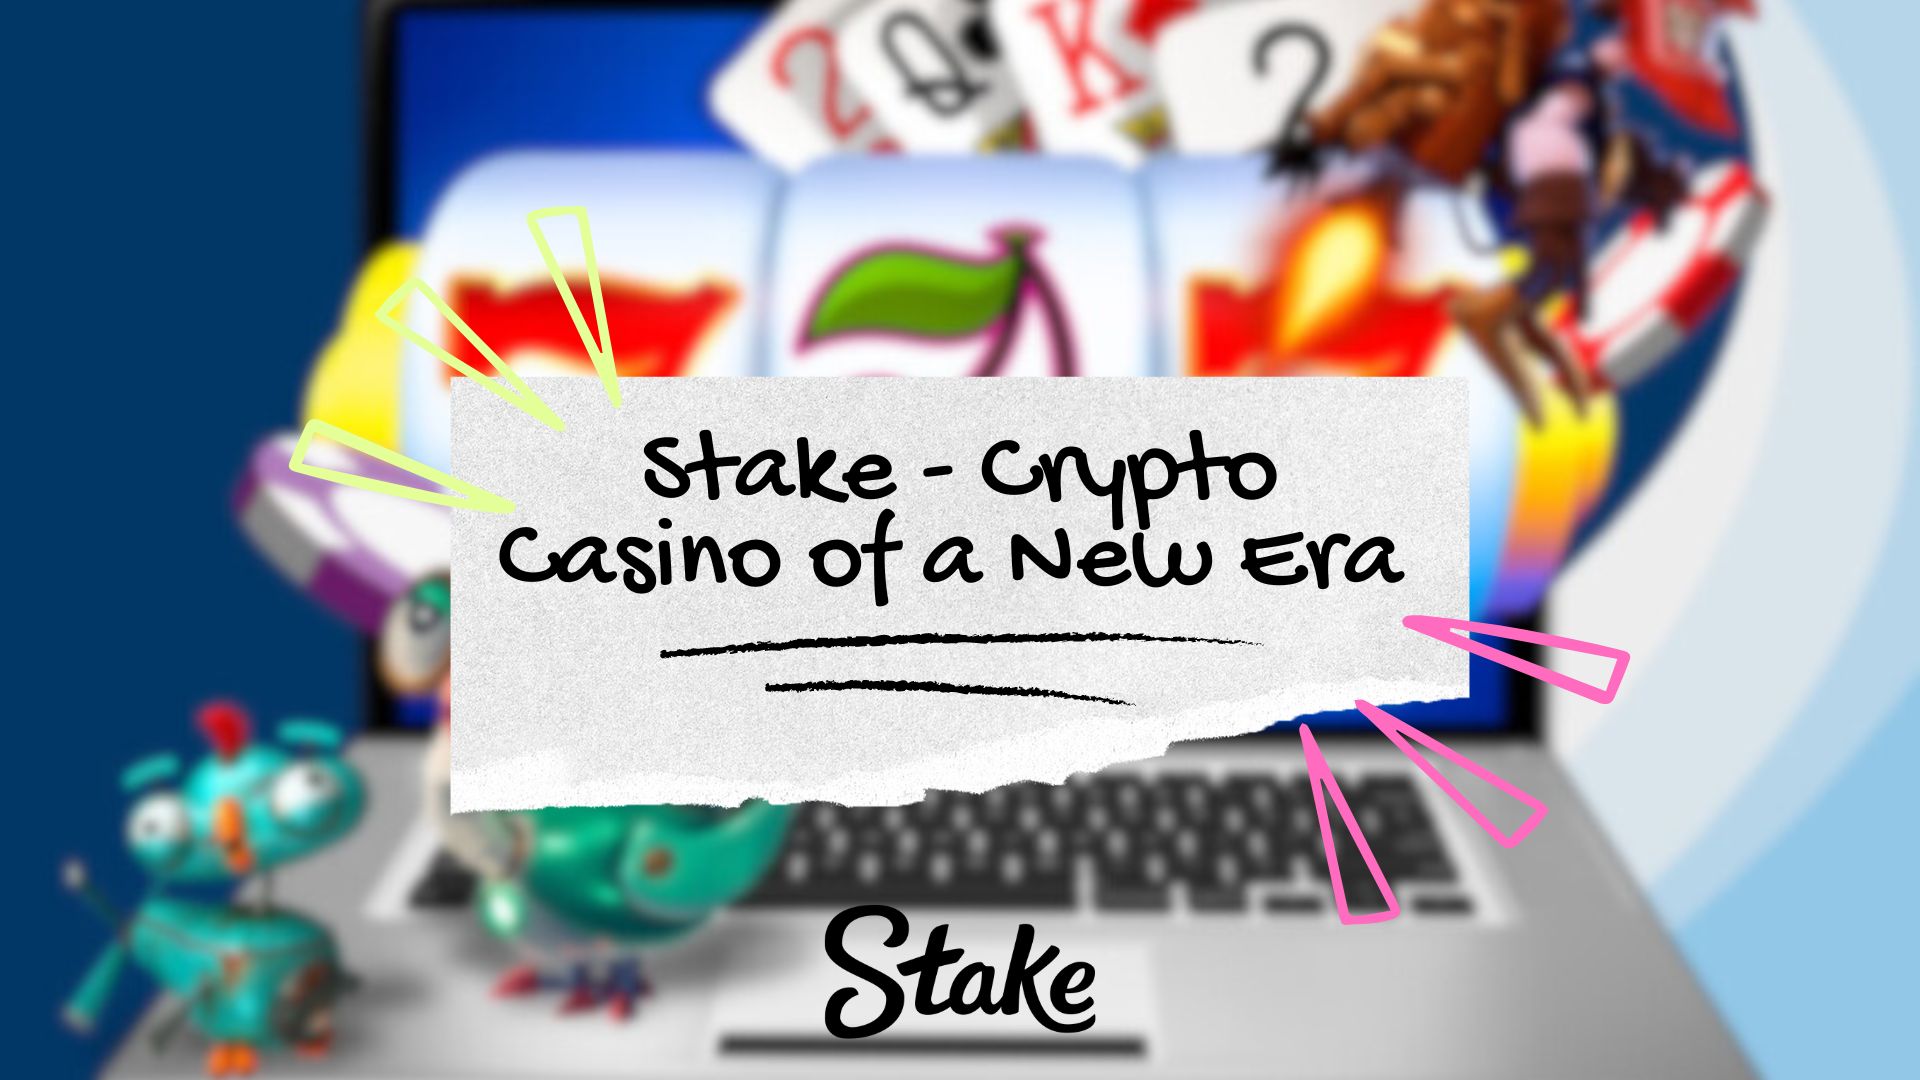 Stake - Crypto Casino of a New Era